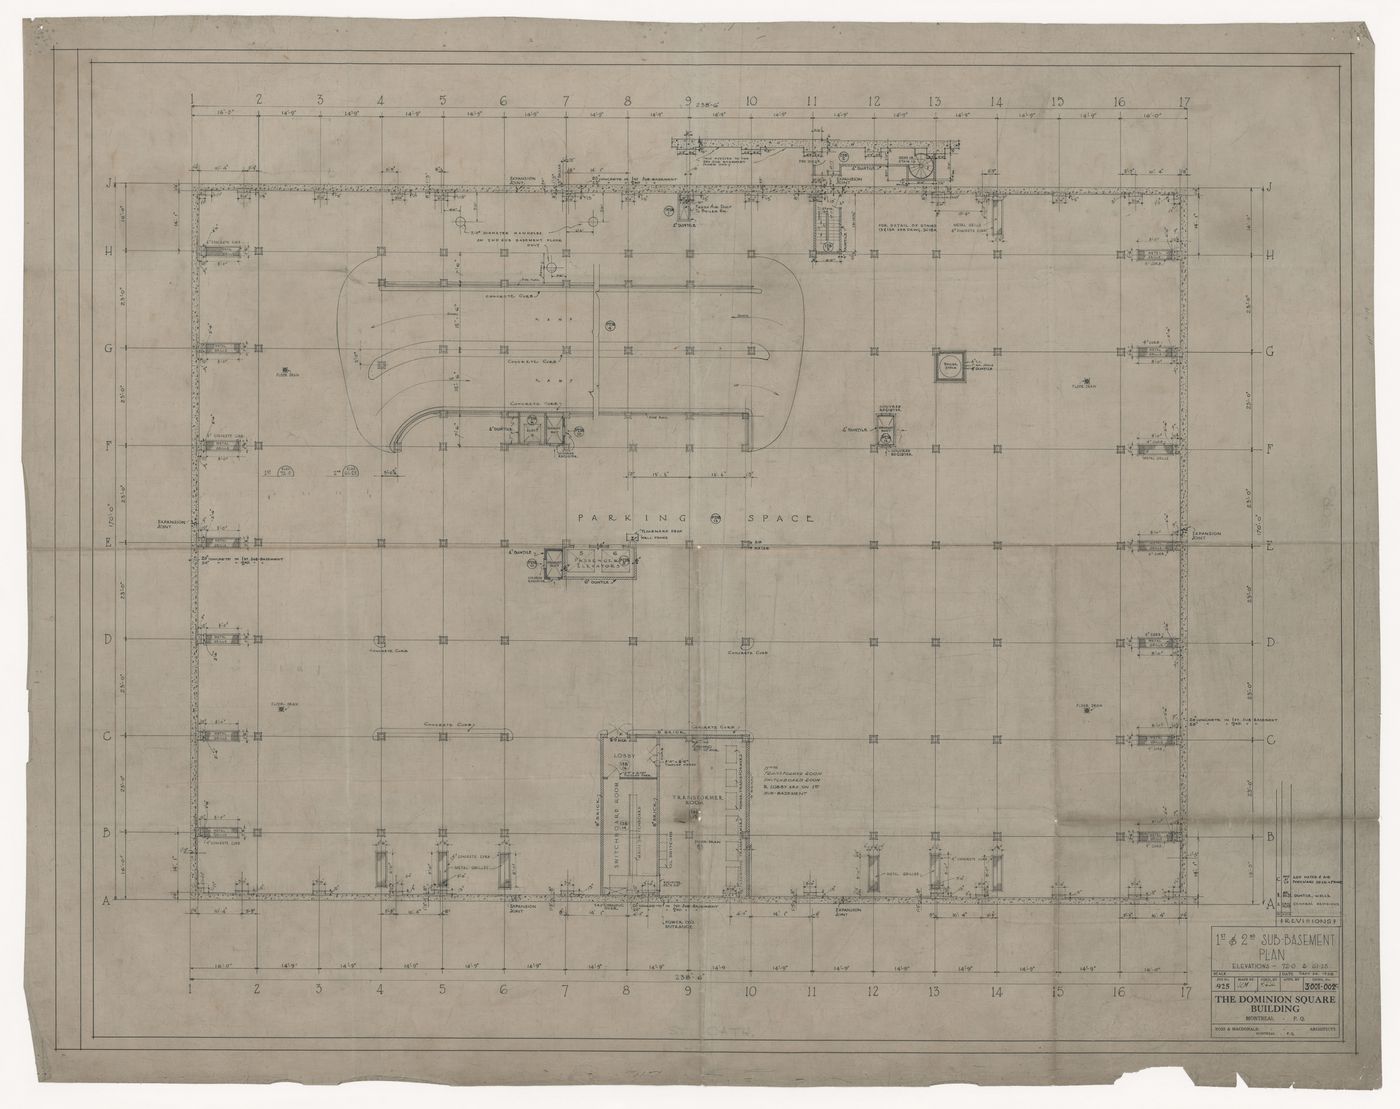 Sub-basement plan for Dominion Square Building, Montreal, Québec